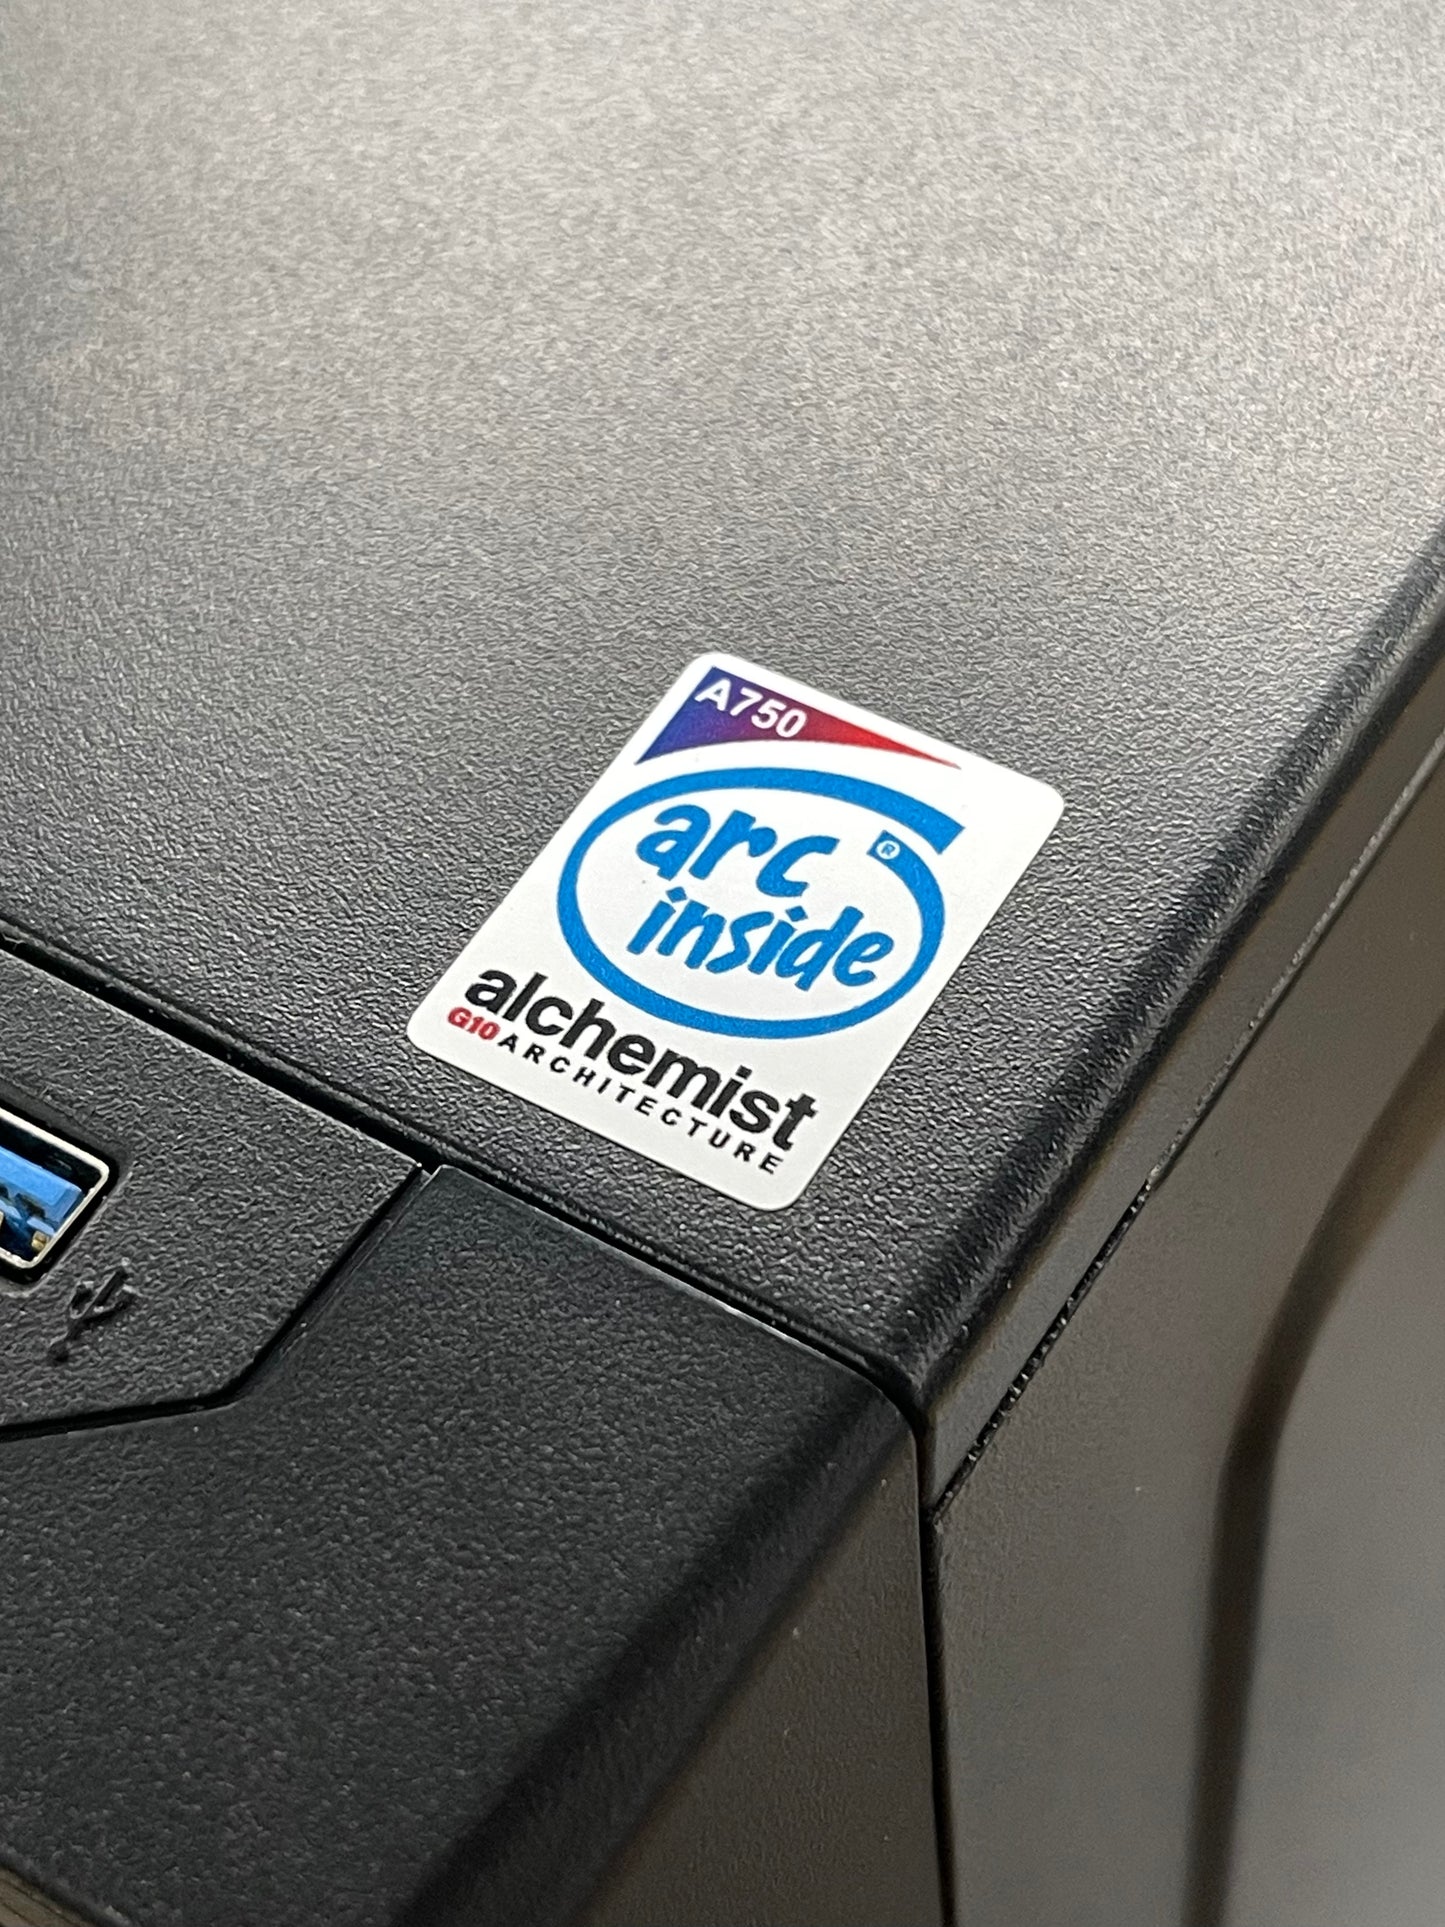 Intel “ARC Inside” 750 Graphics Alchemist Case Badge Sticker - White